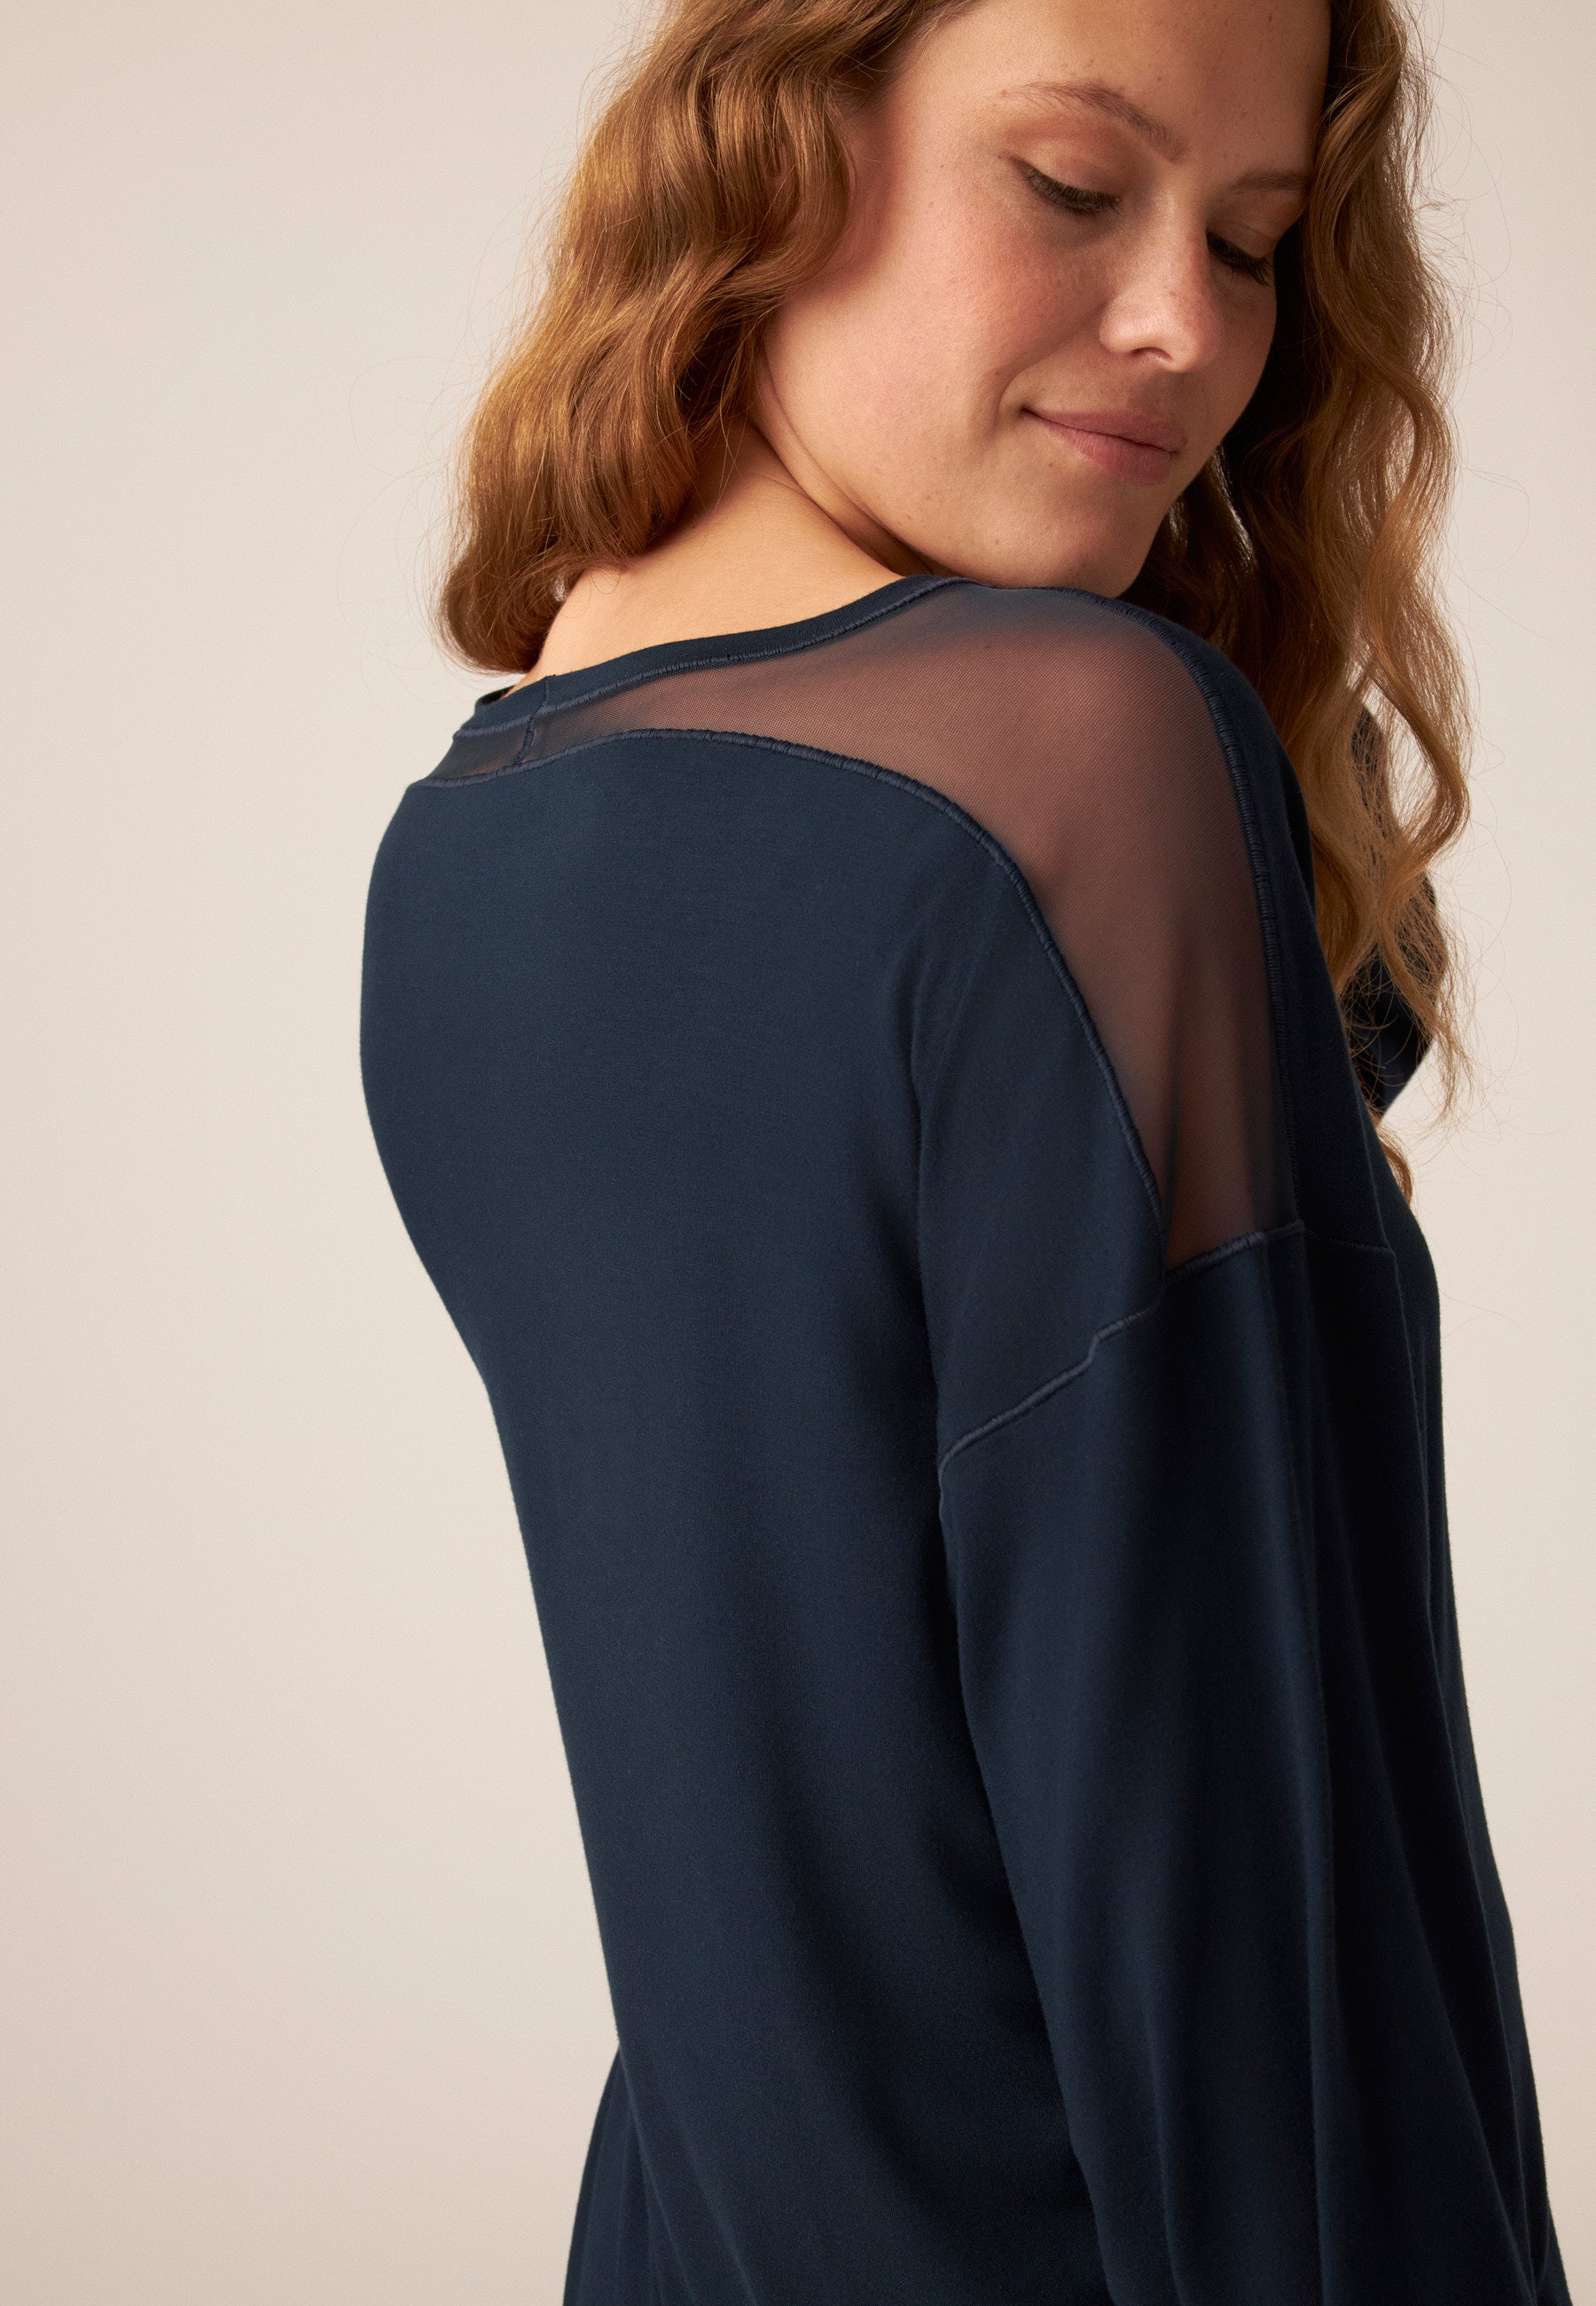 Long-Sleeve Shirt with Mesh Details - Dark Blue